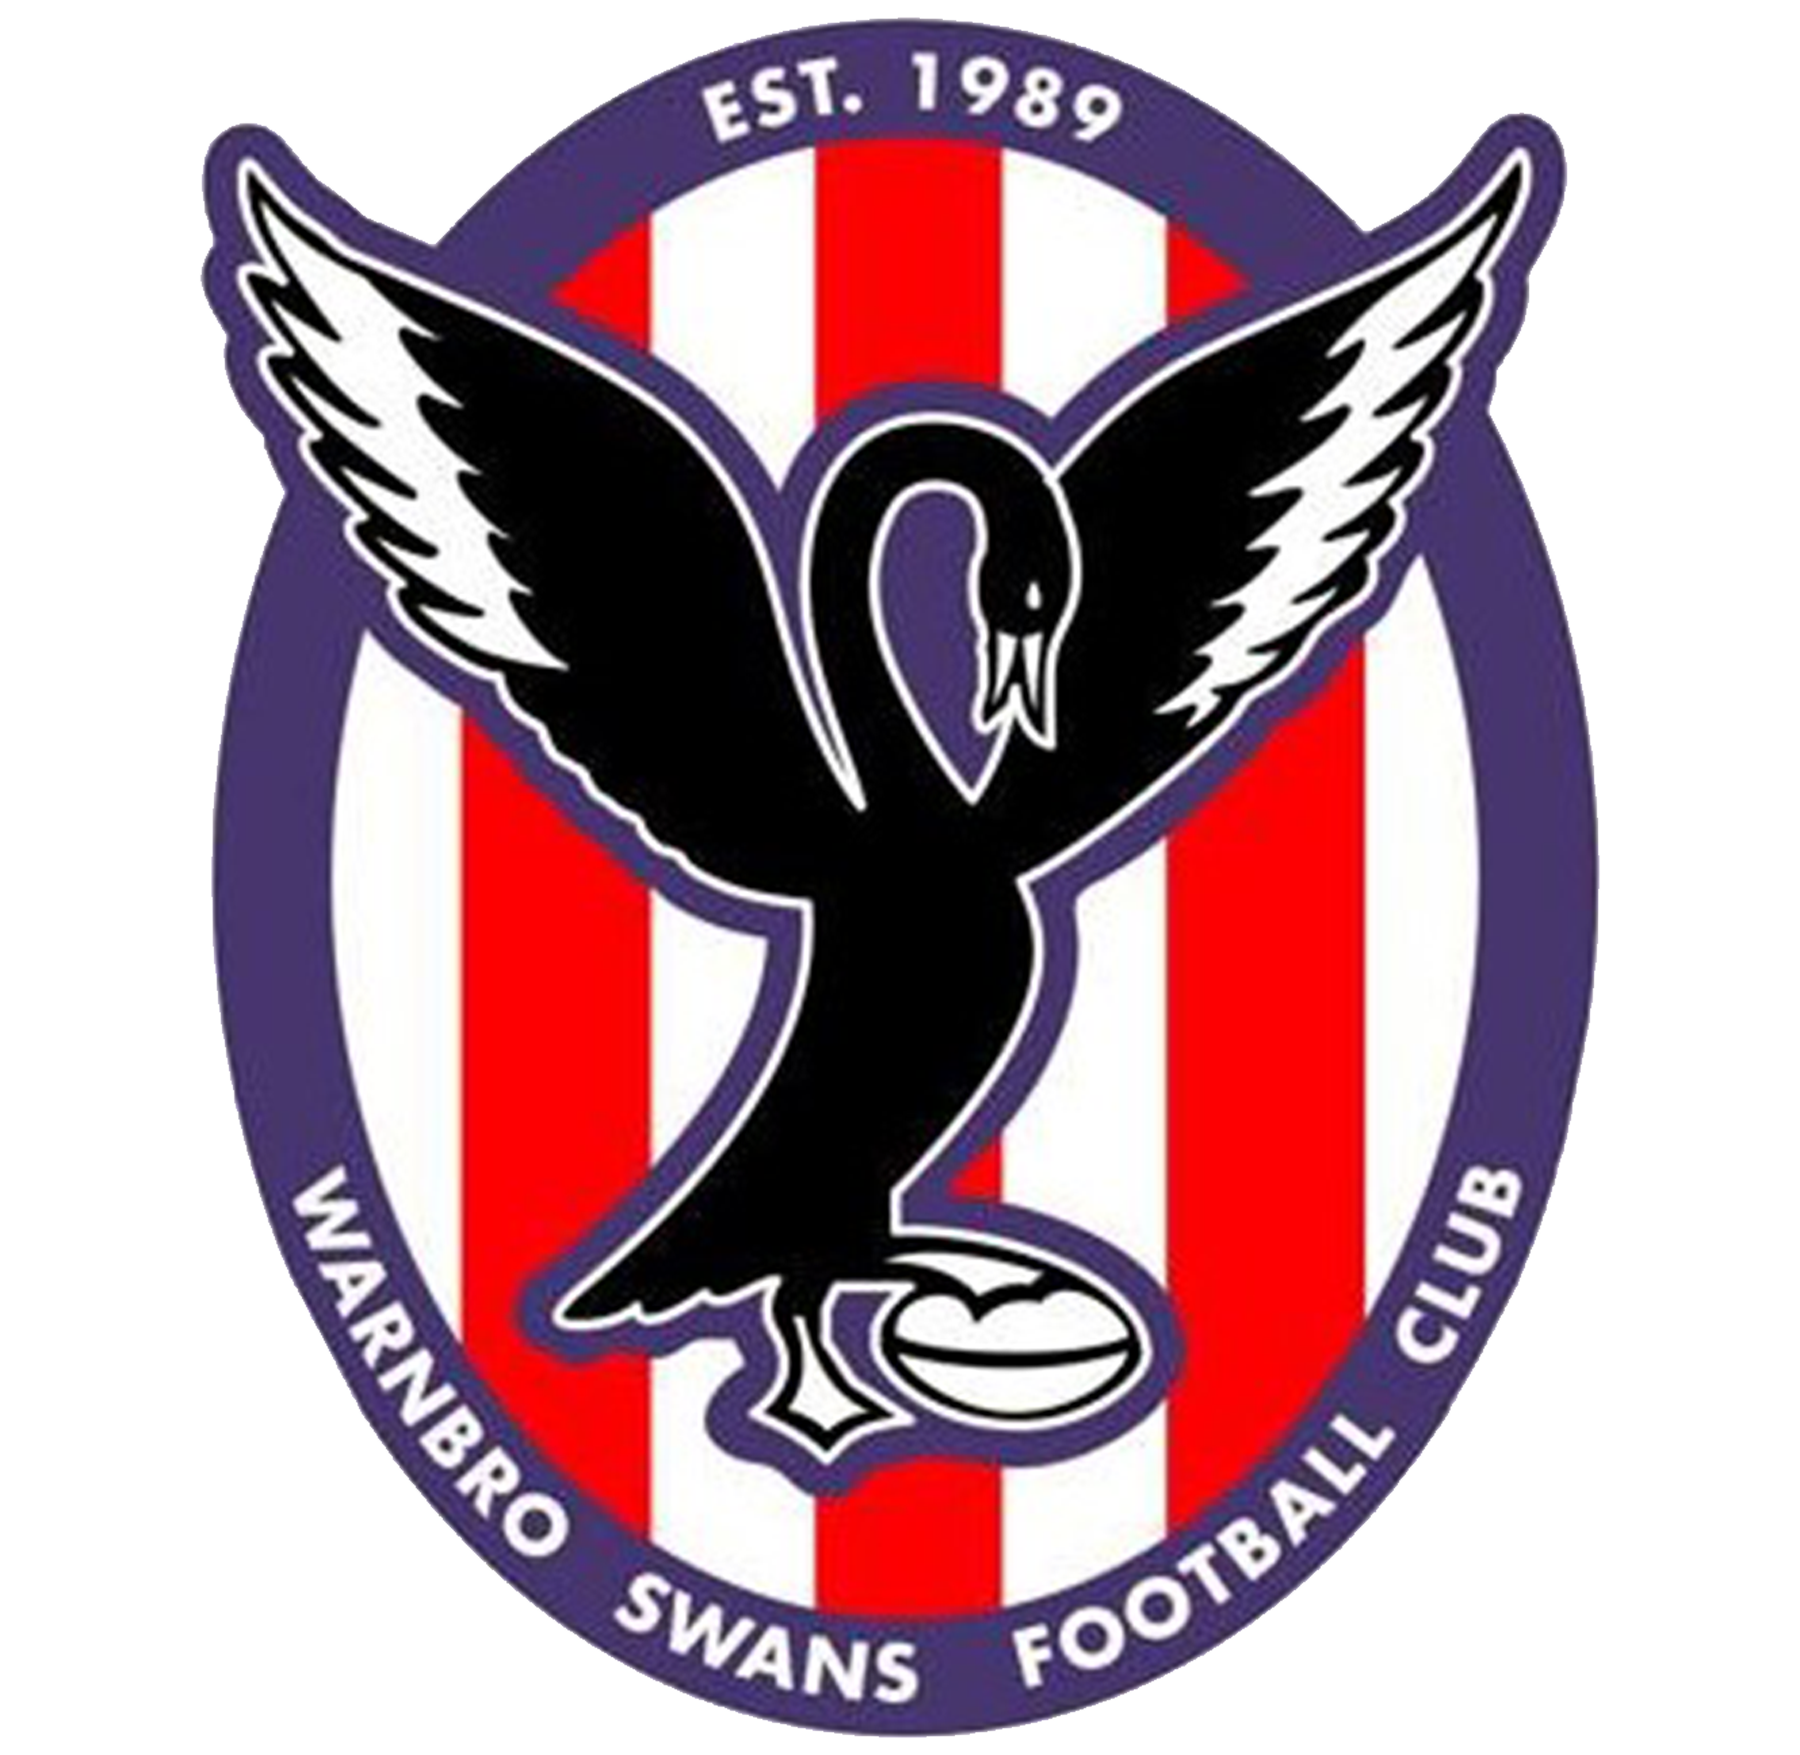 Warnbro Swans Football Club